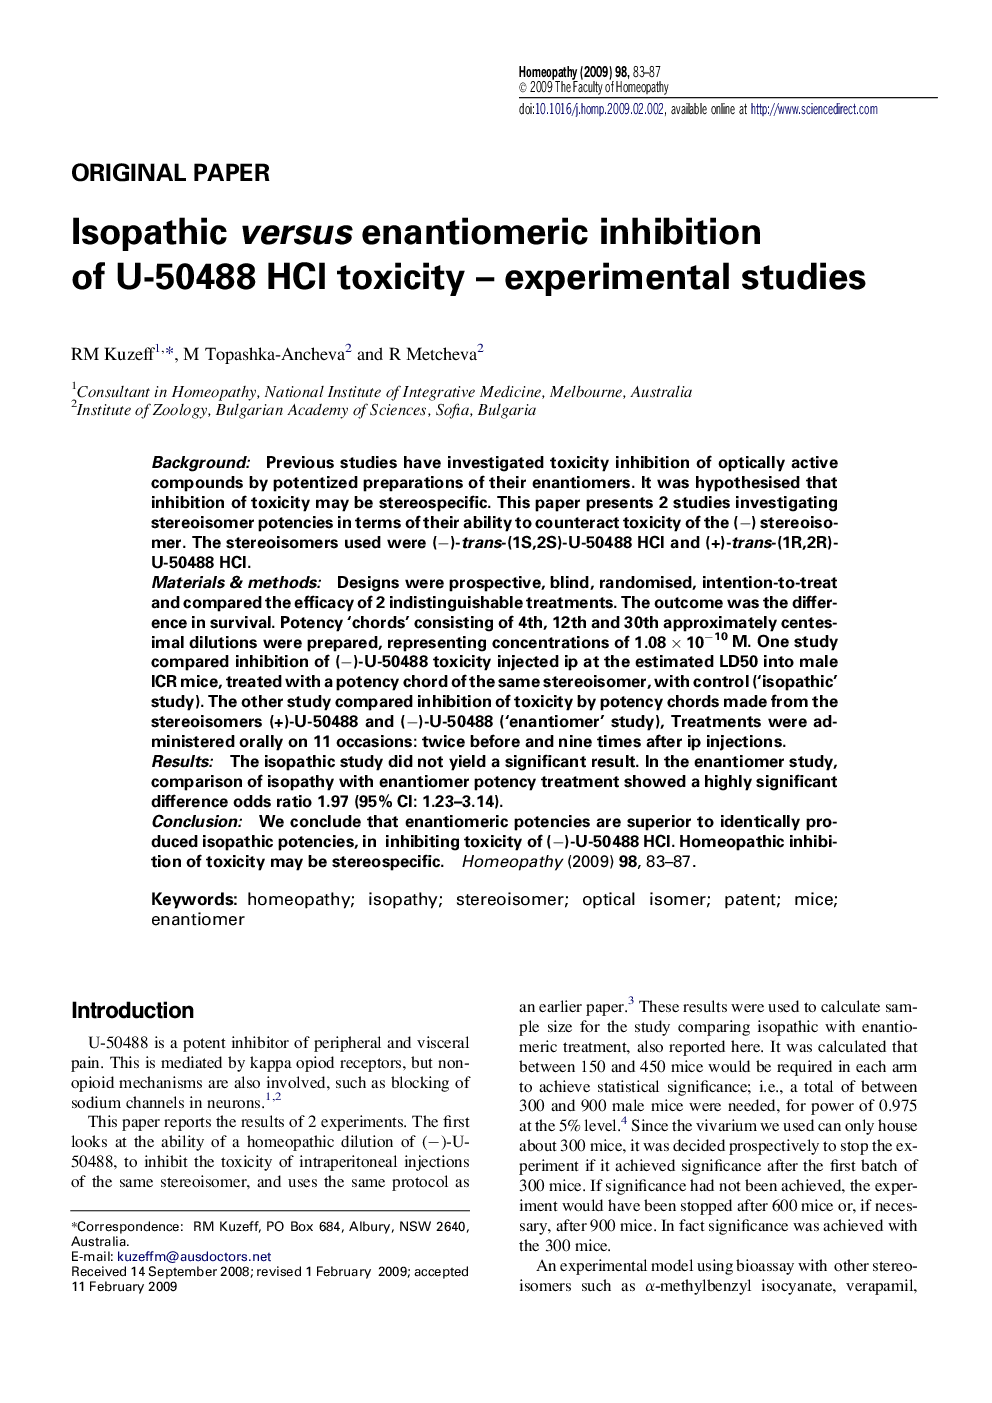 Isopathic versus enantiomeric inhibition of U-50488 HCl toxicity - experimental studies